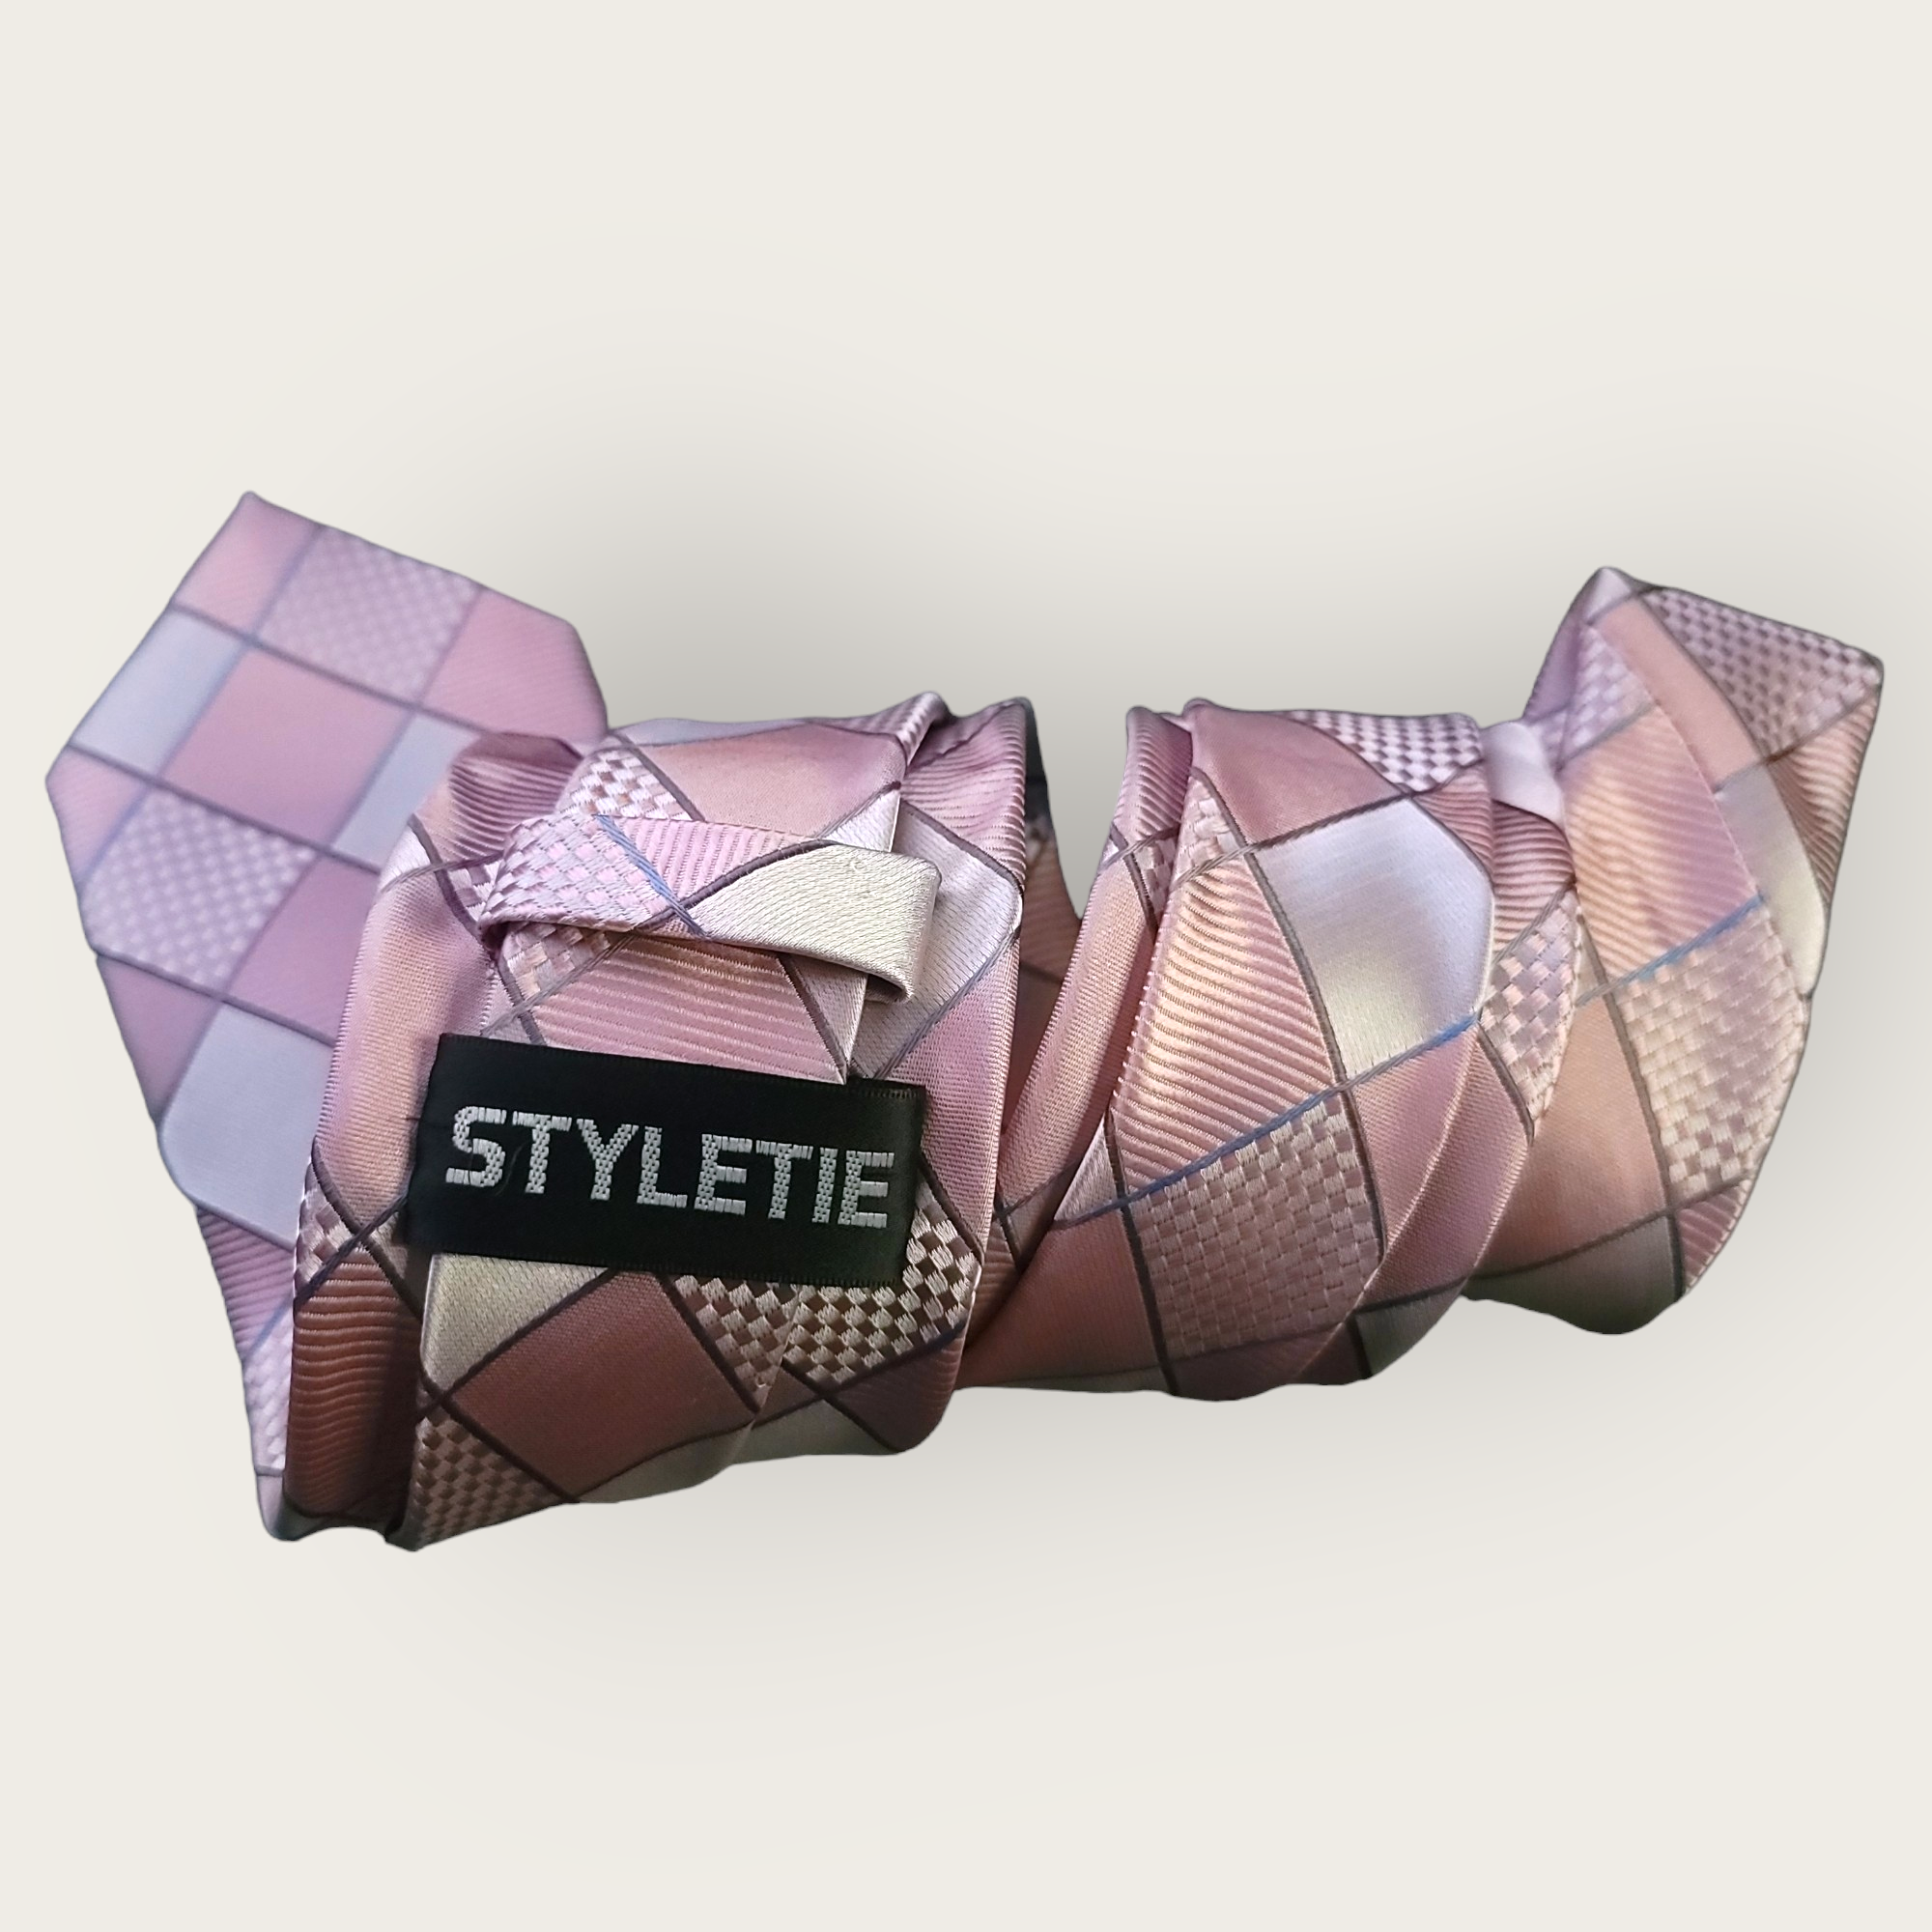 Pink Plaid Silk Tie Pocket Square Cufflink Set